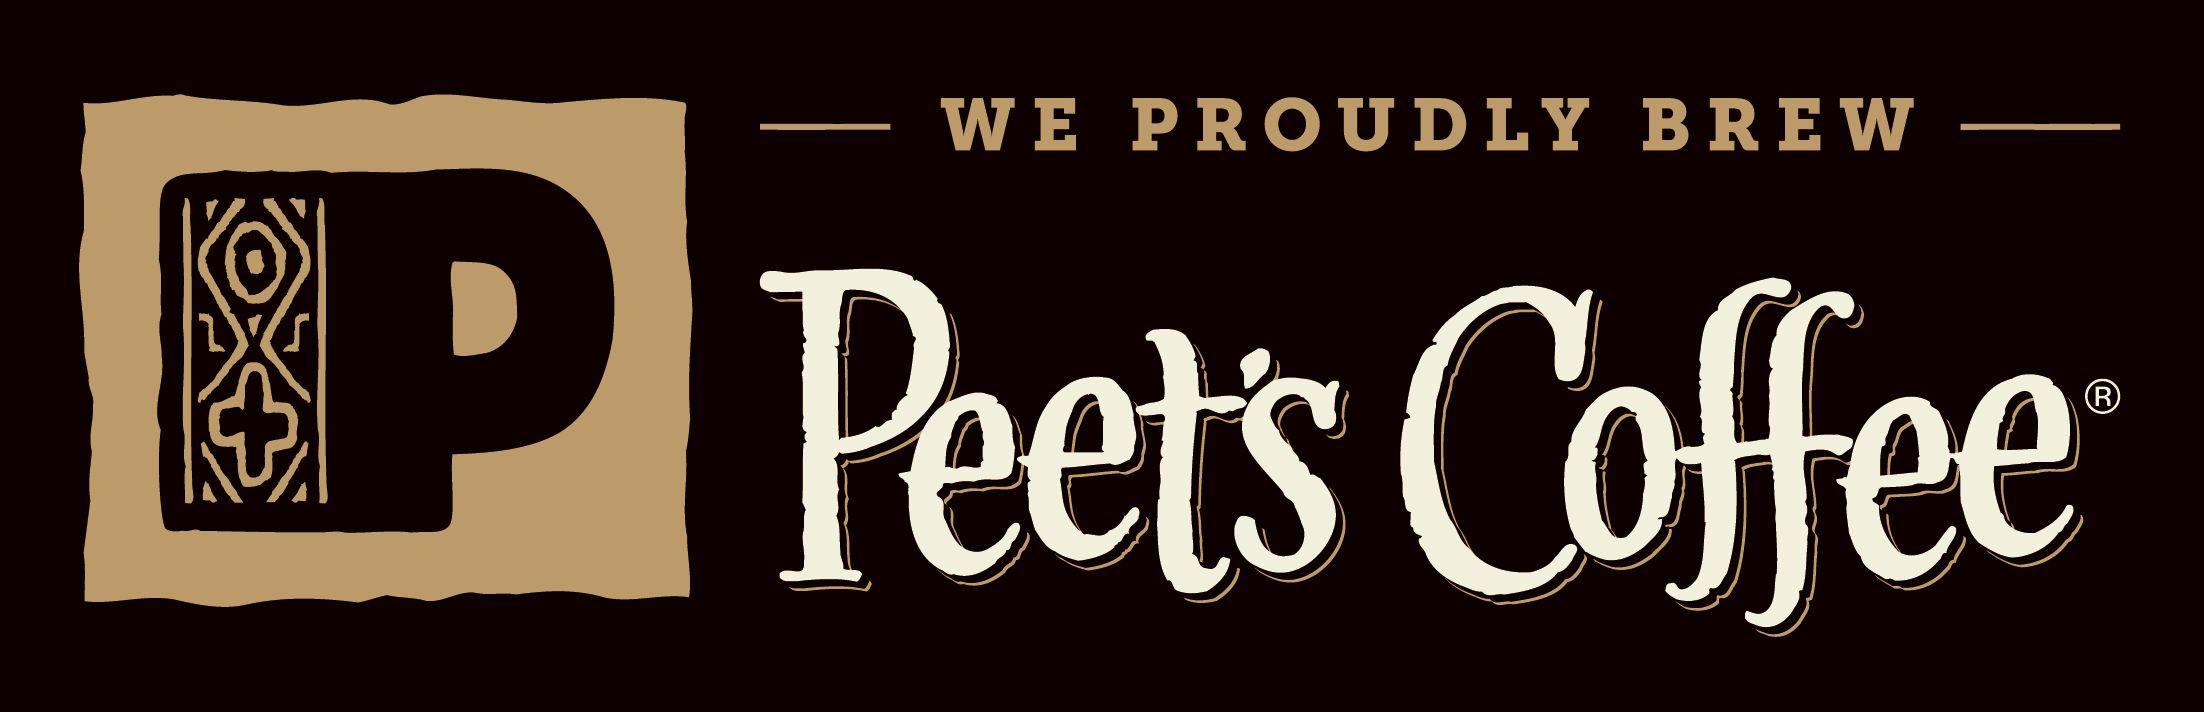 Peet's Coffee New Logo - Peet's Coffee Comes To Rancho Mission Viejo - Rancho Mission Viejo